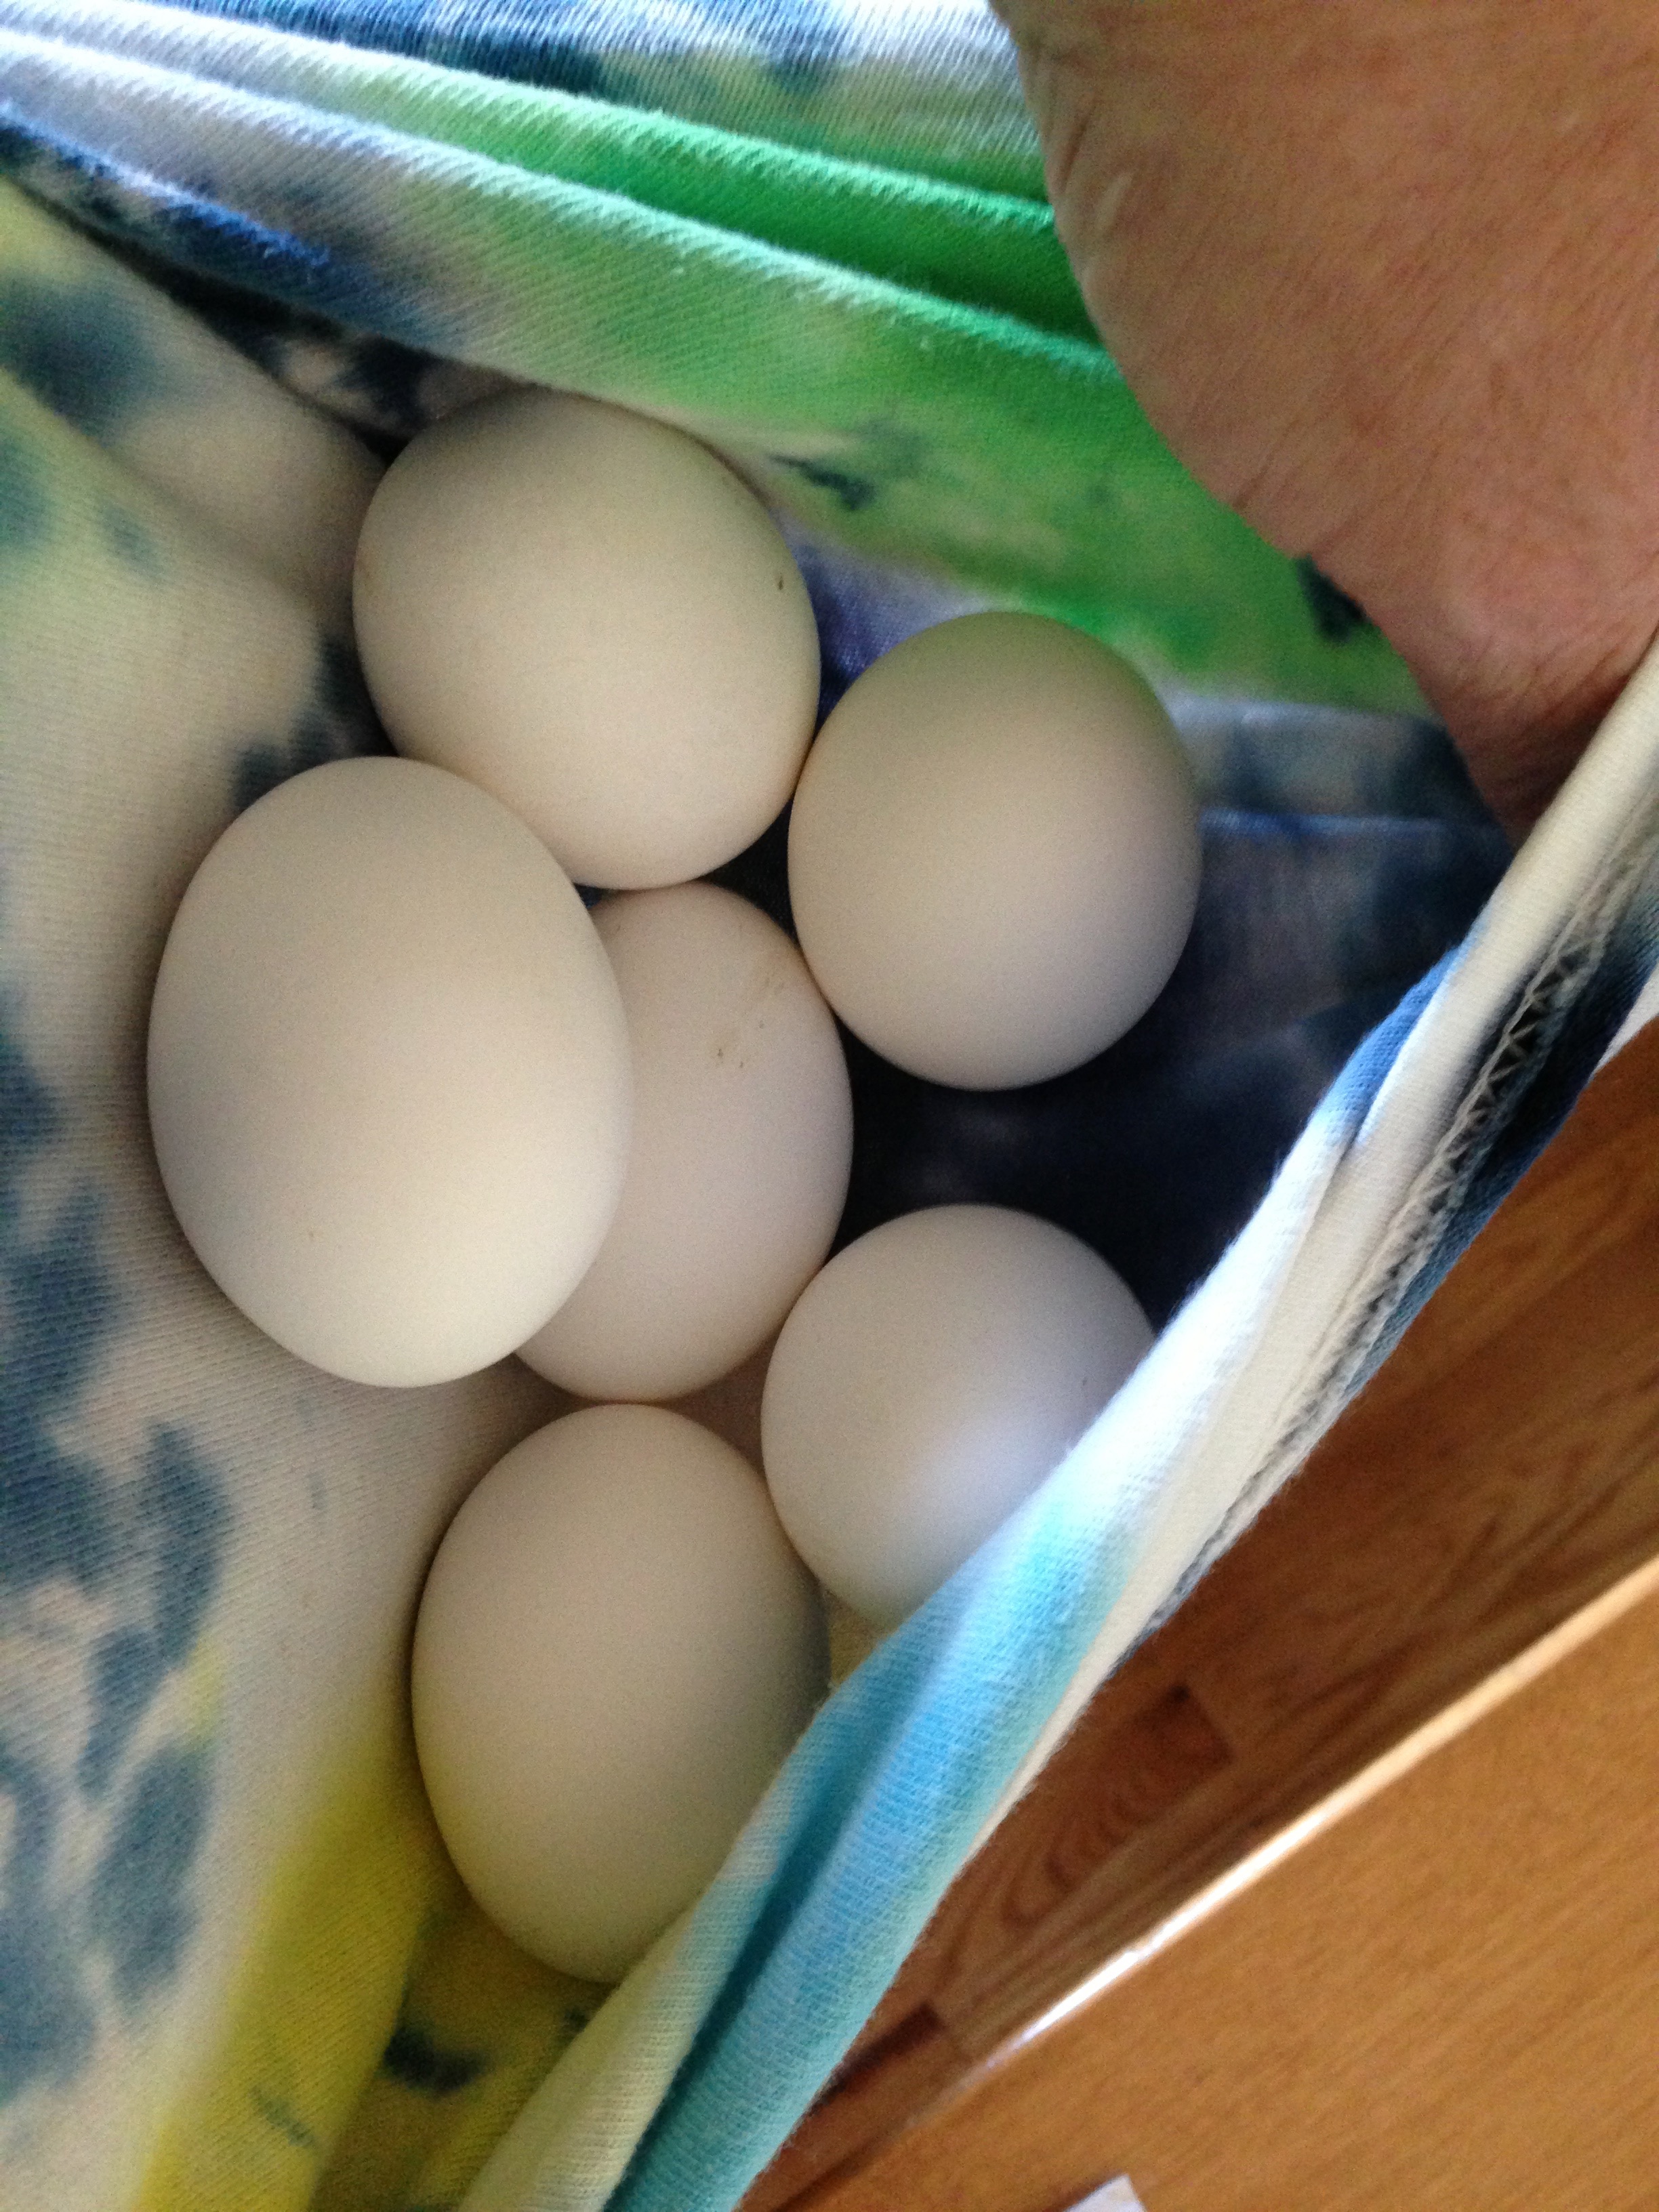 Gathering eggs